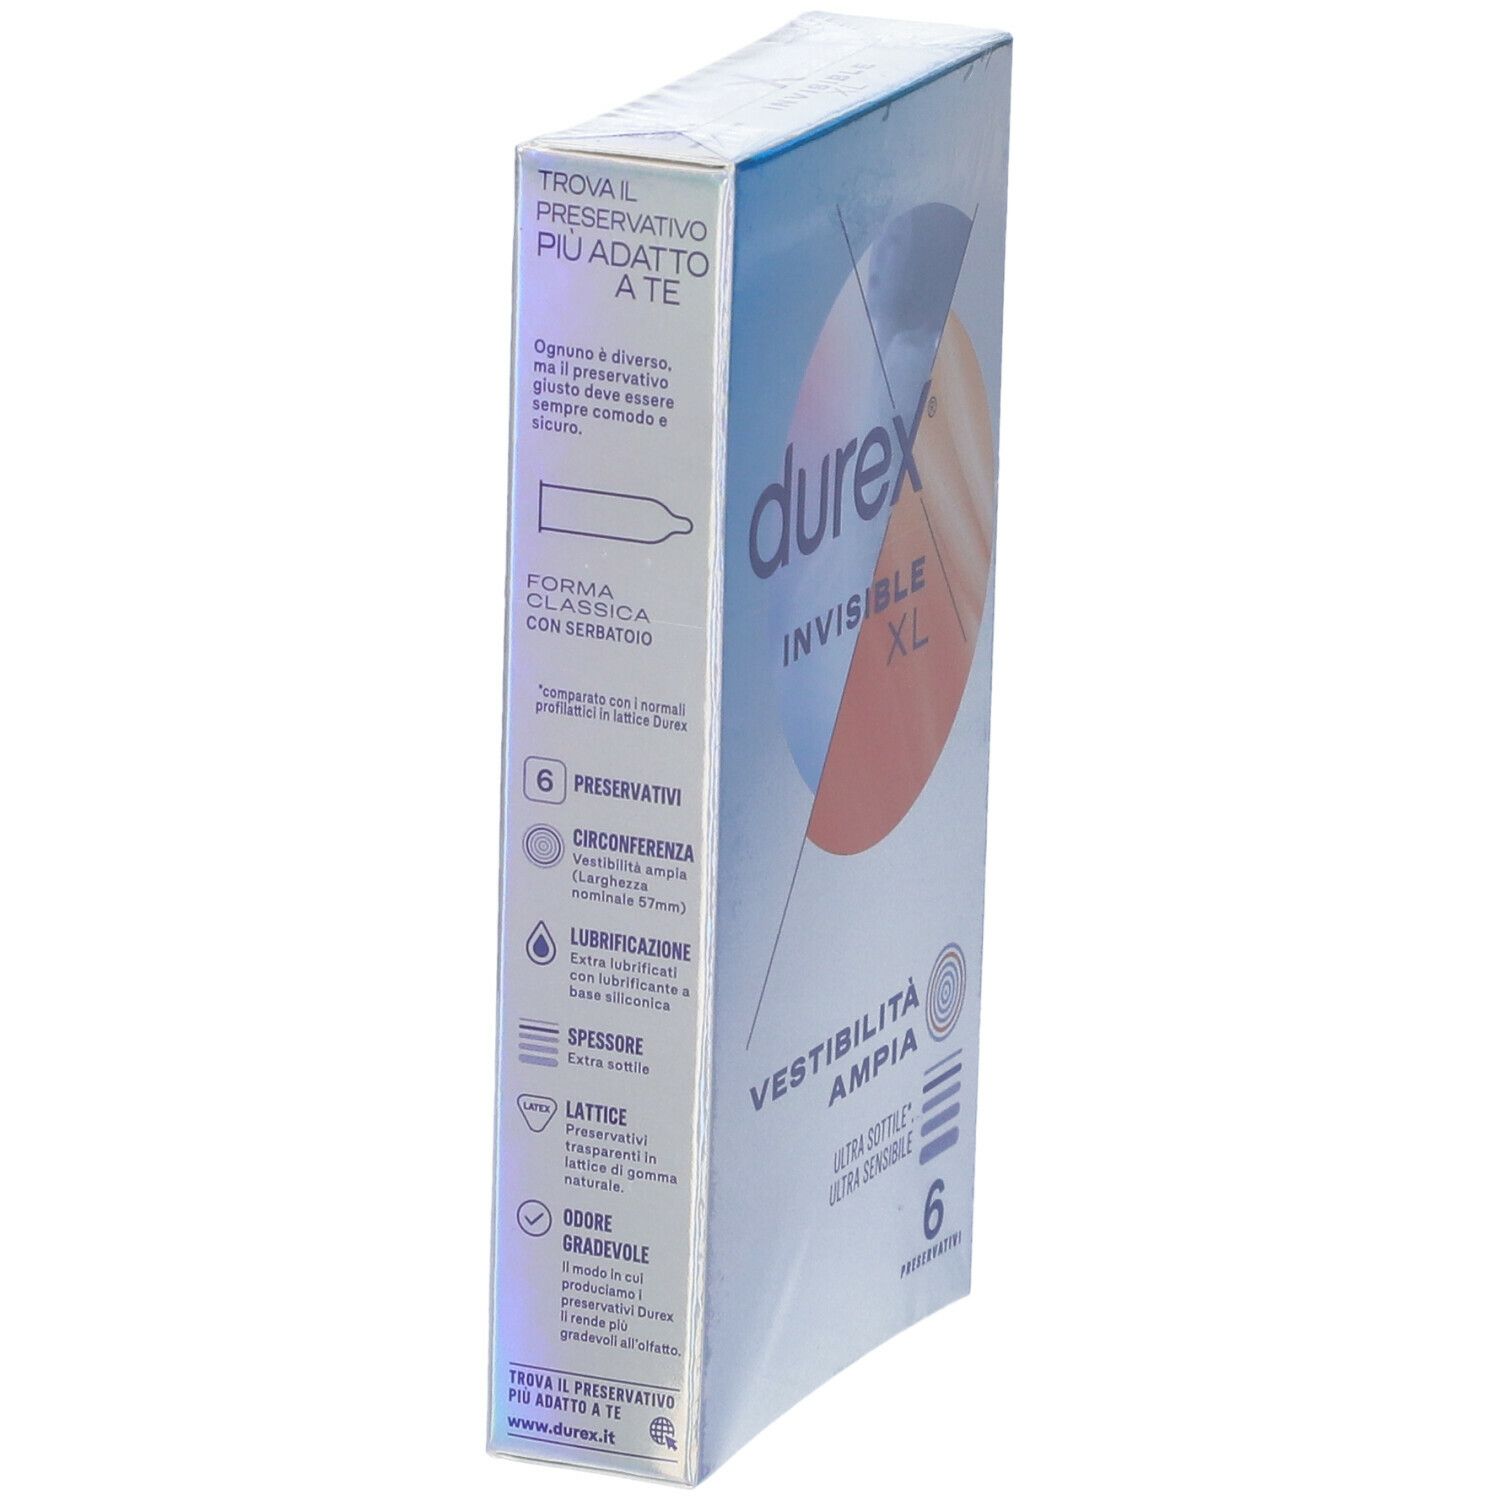 Durex® Invisible XL Extra Sottile Extra Large